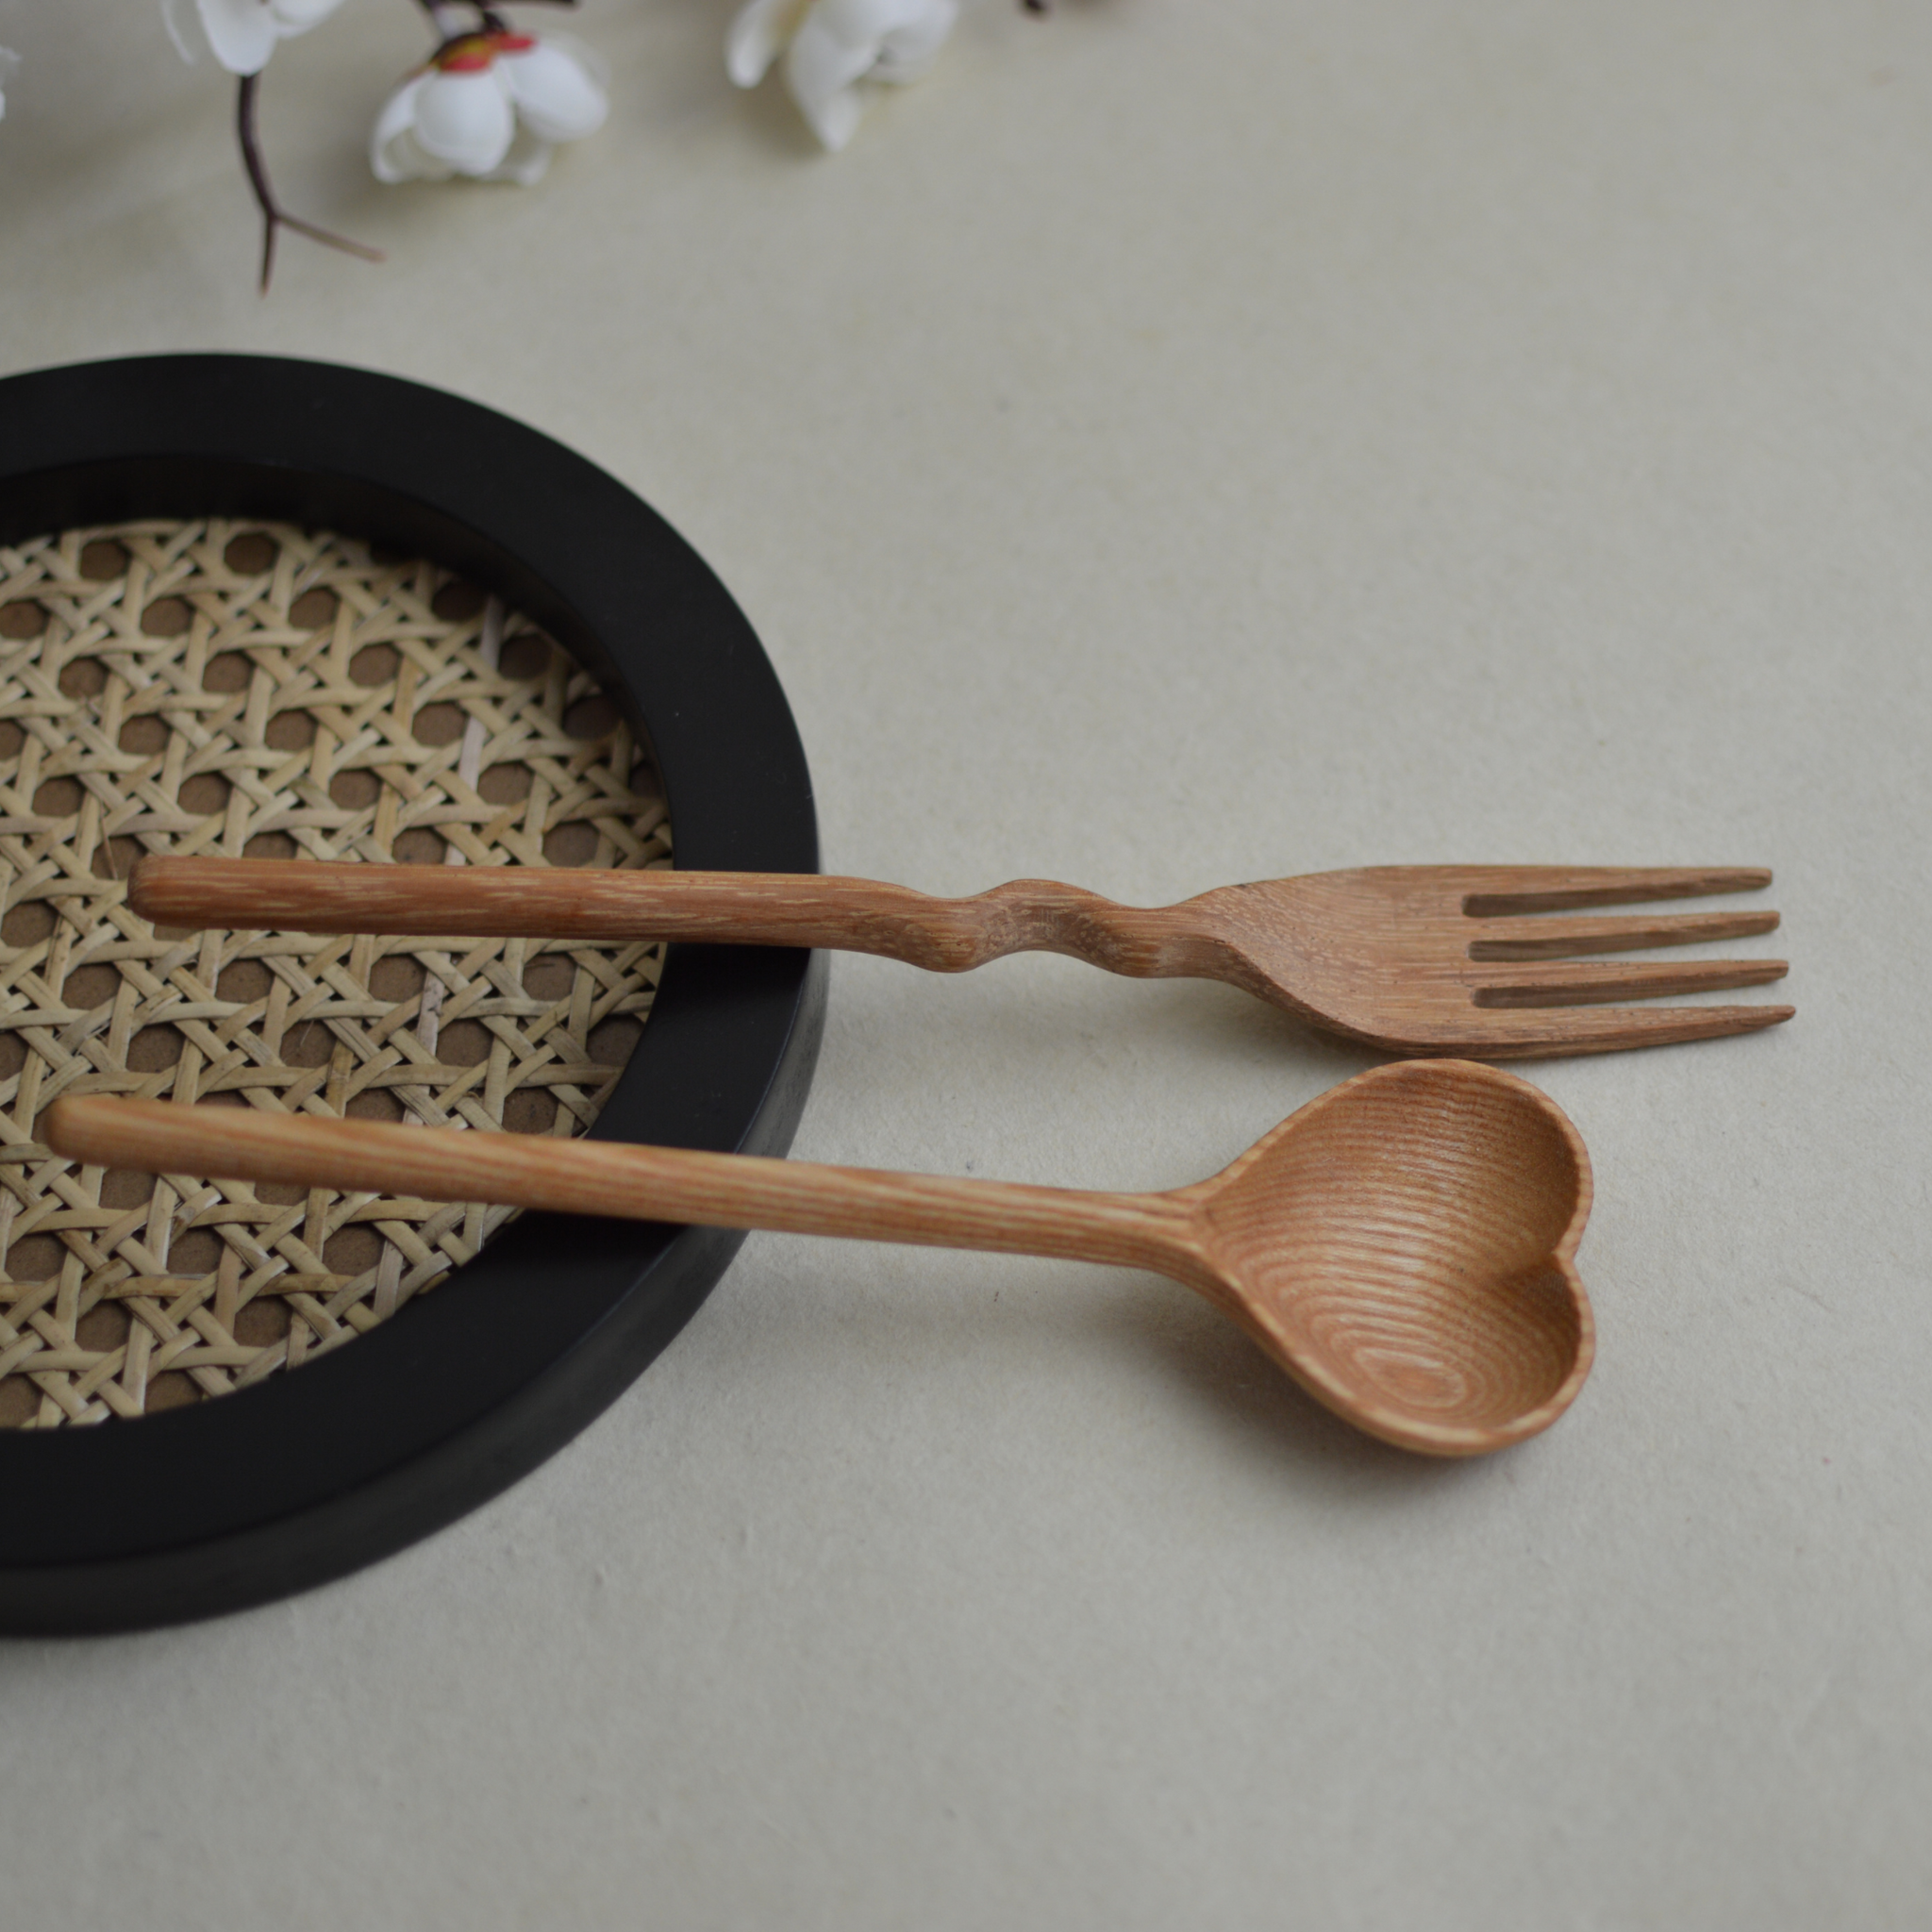 Maple Wood Spoon and Fork Set - Heart Shape Gift Set